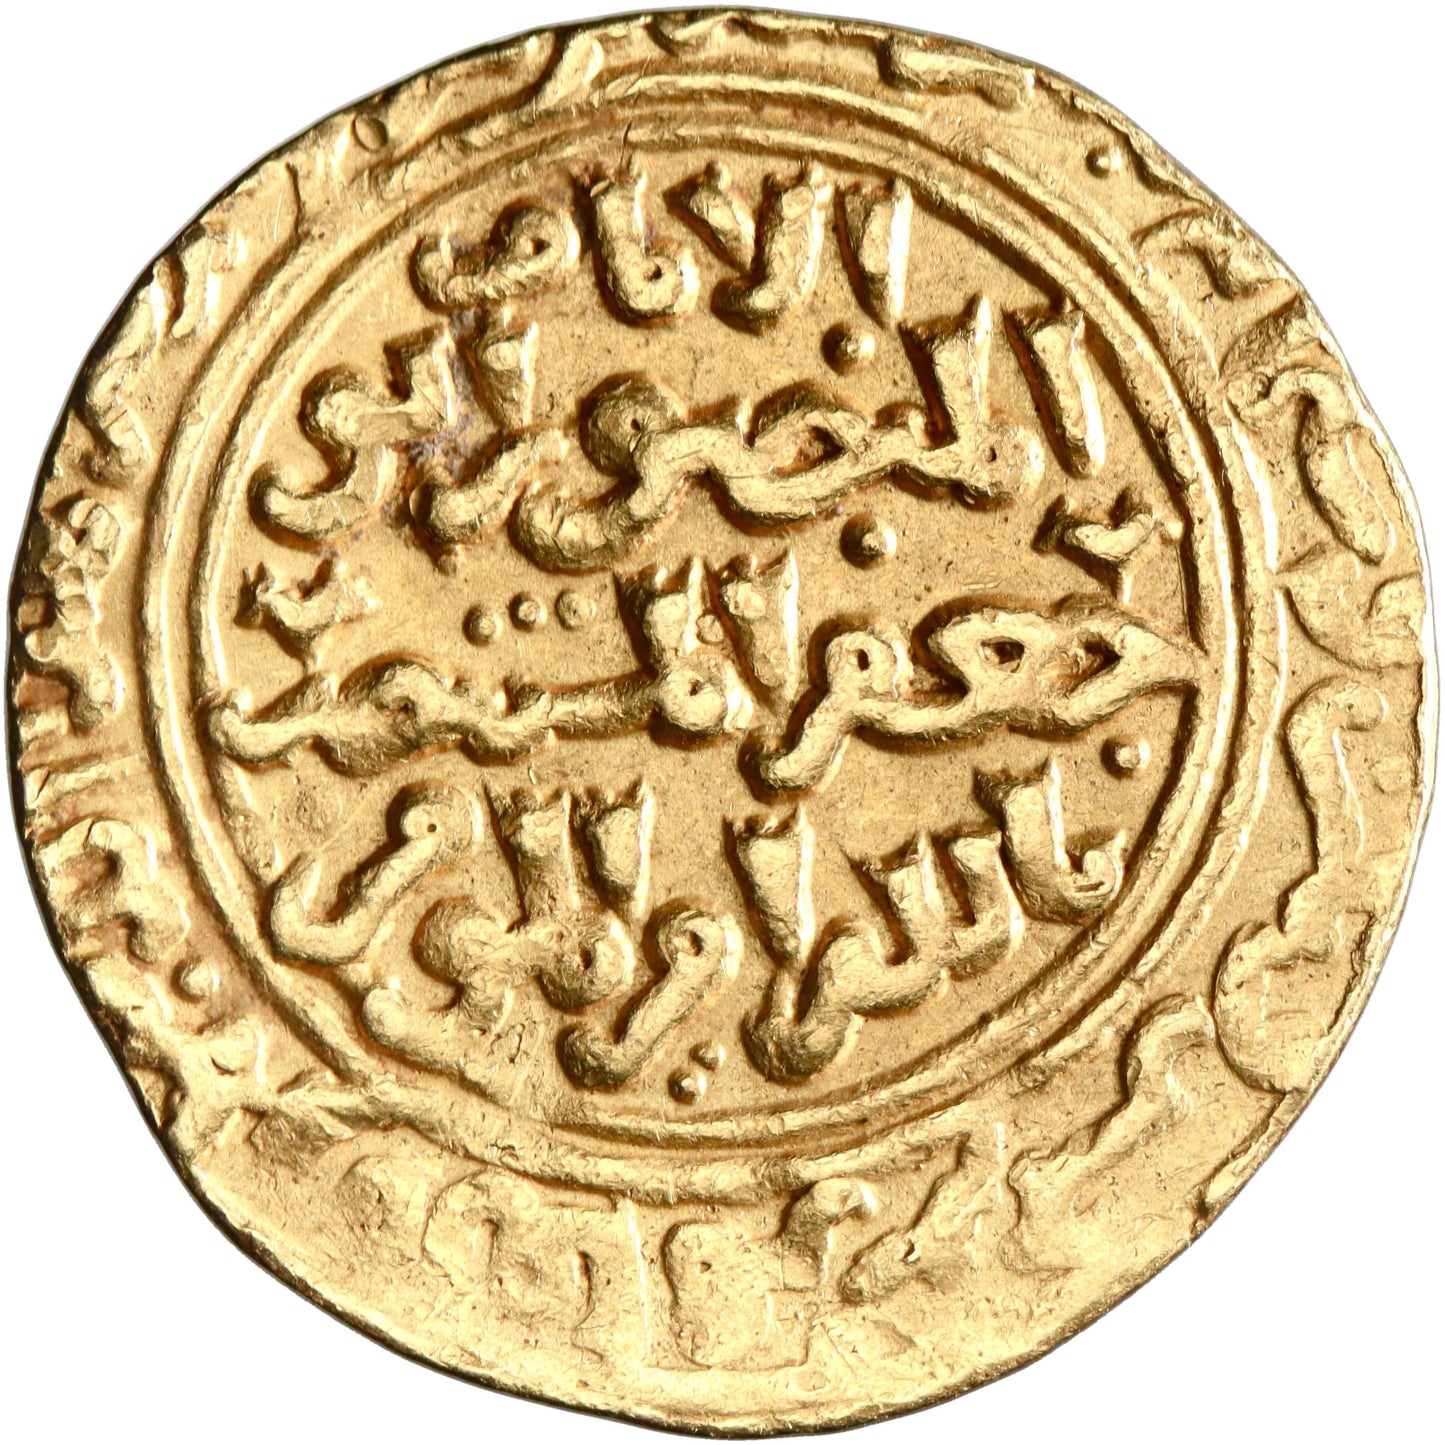 Ayyubid, Abu Bakr II, gold dinar, al-Qahira (Cairo) mint, AH 635, citing al-Mustansir